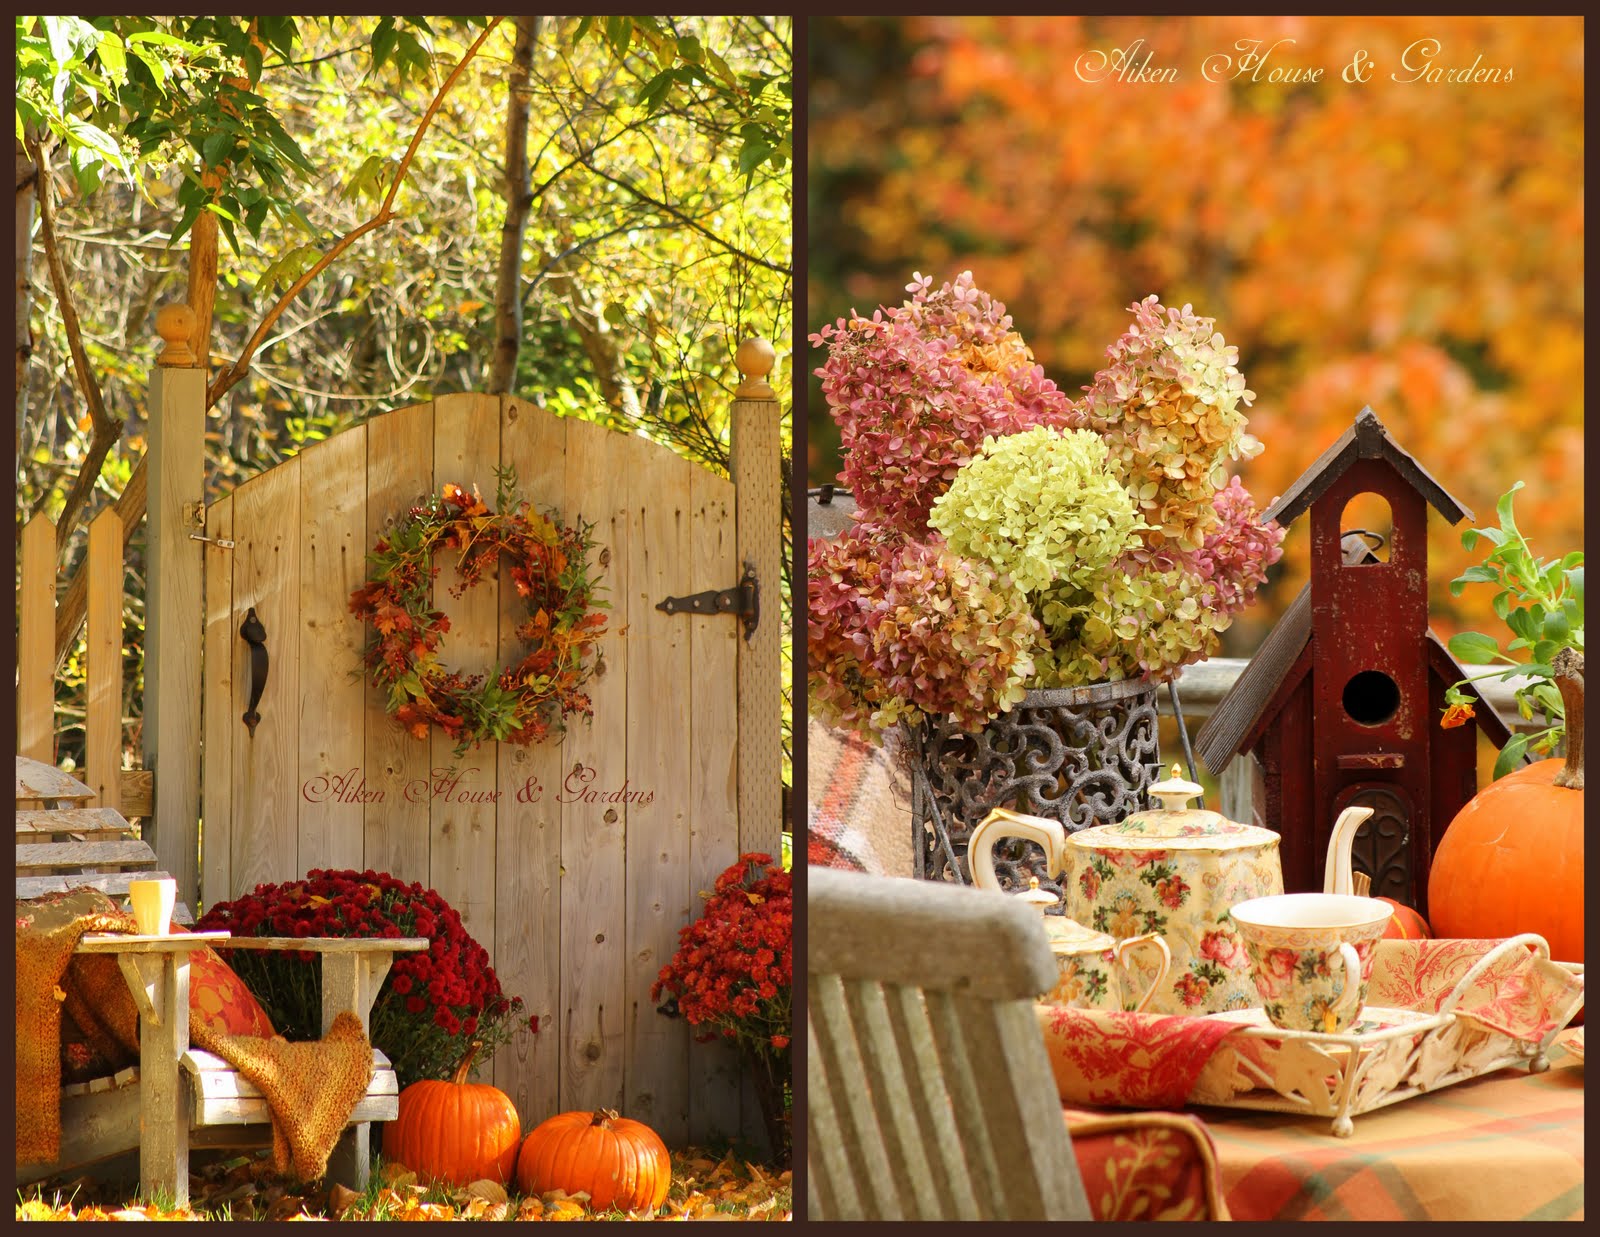 Aiken House & Gardens: Sunny Autumn Respite